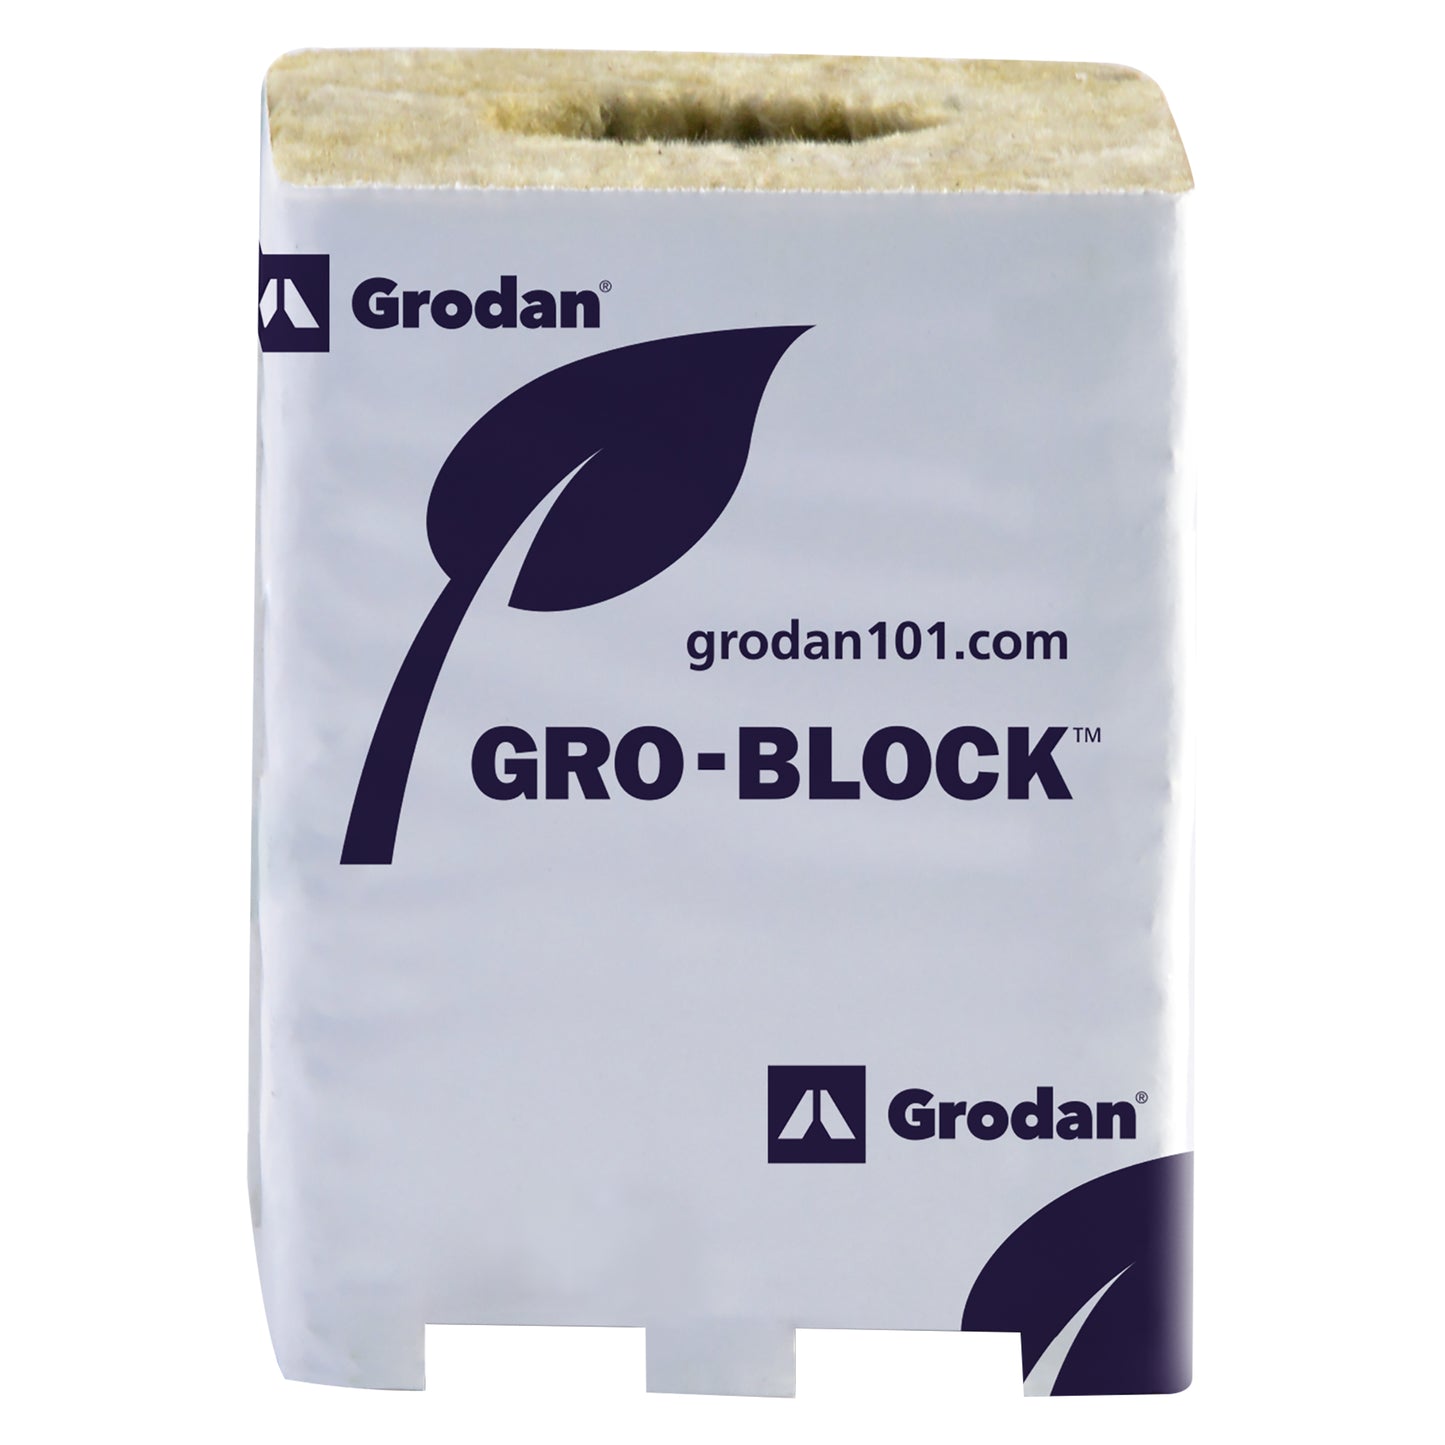 Grodan Gro-Block Improved